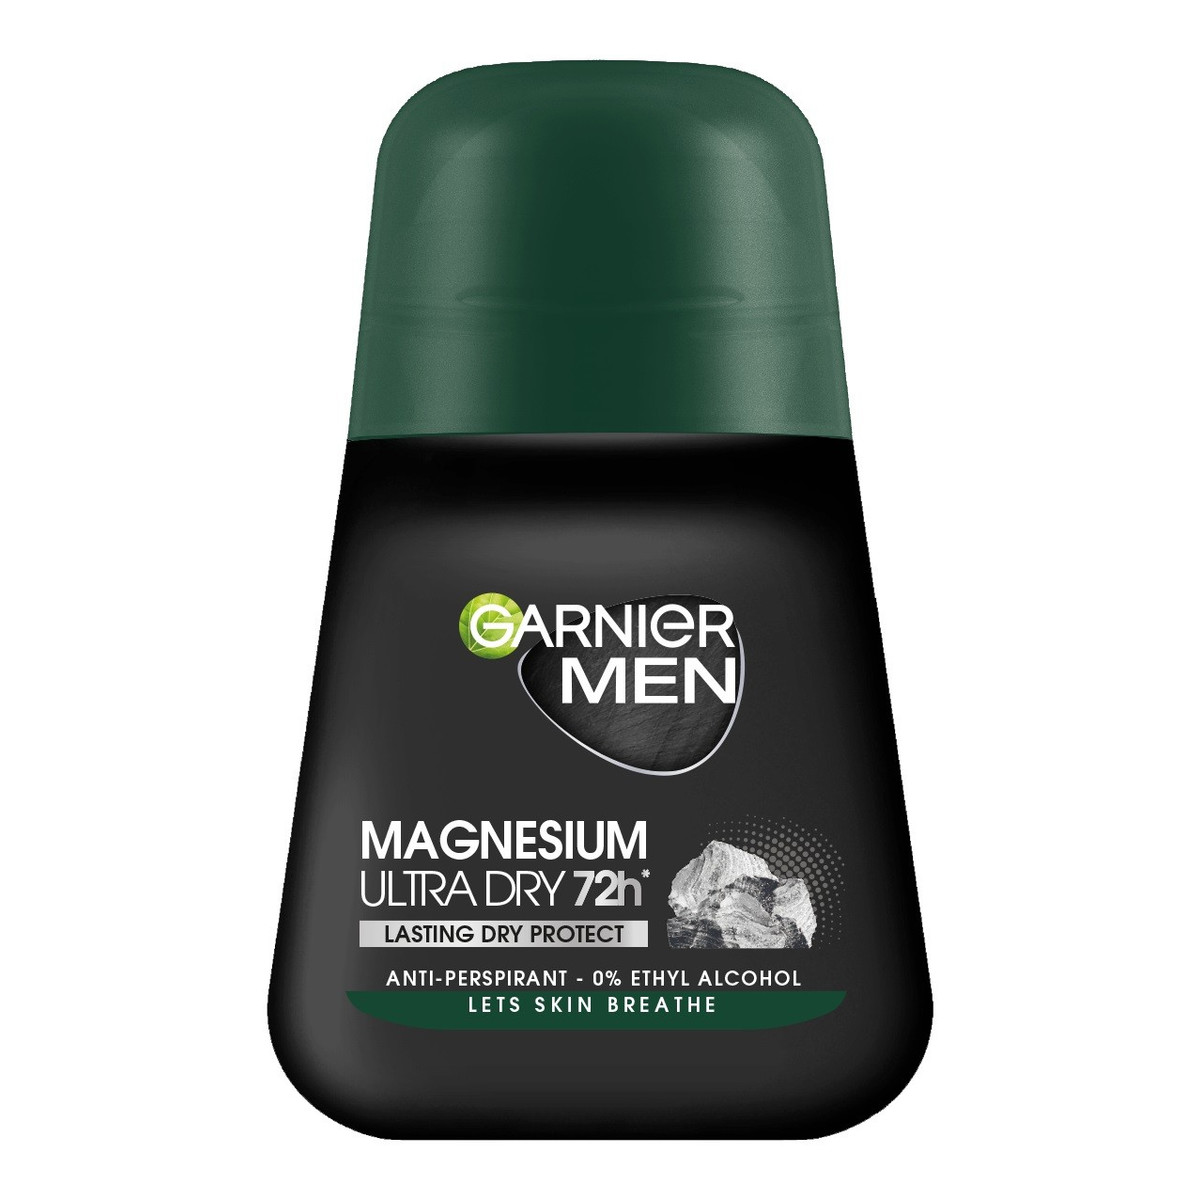 Garnier Men Dezodorant roll-on Magnesium Ultra Dry 72h - Lasting Dry Protect 50ml